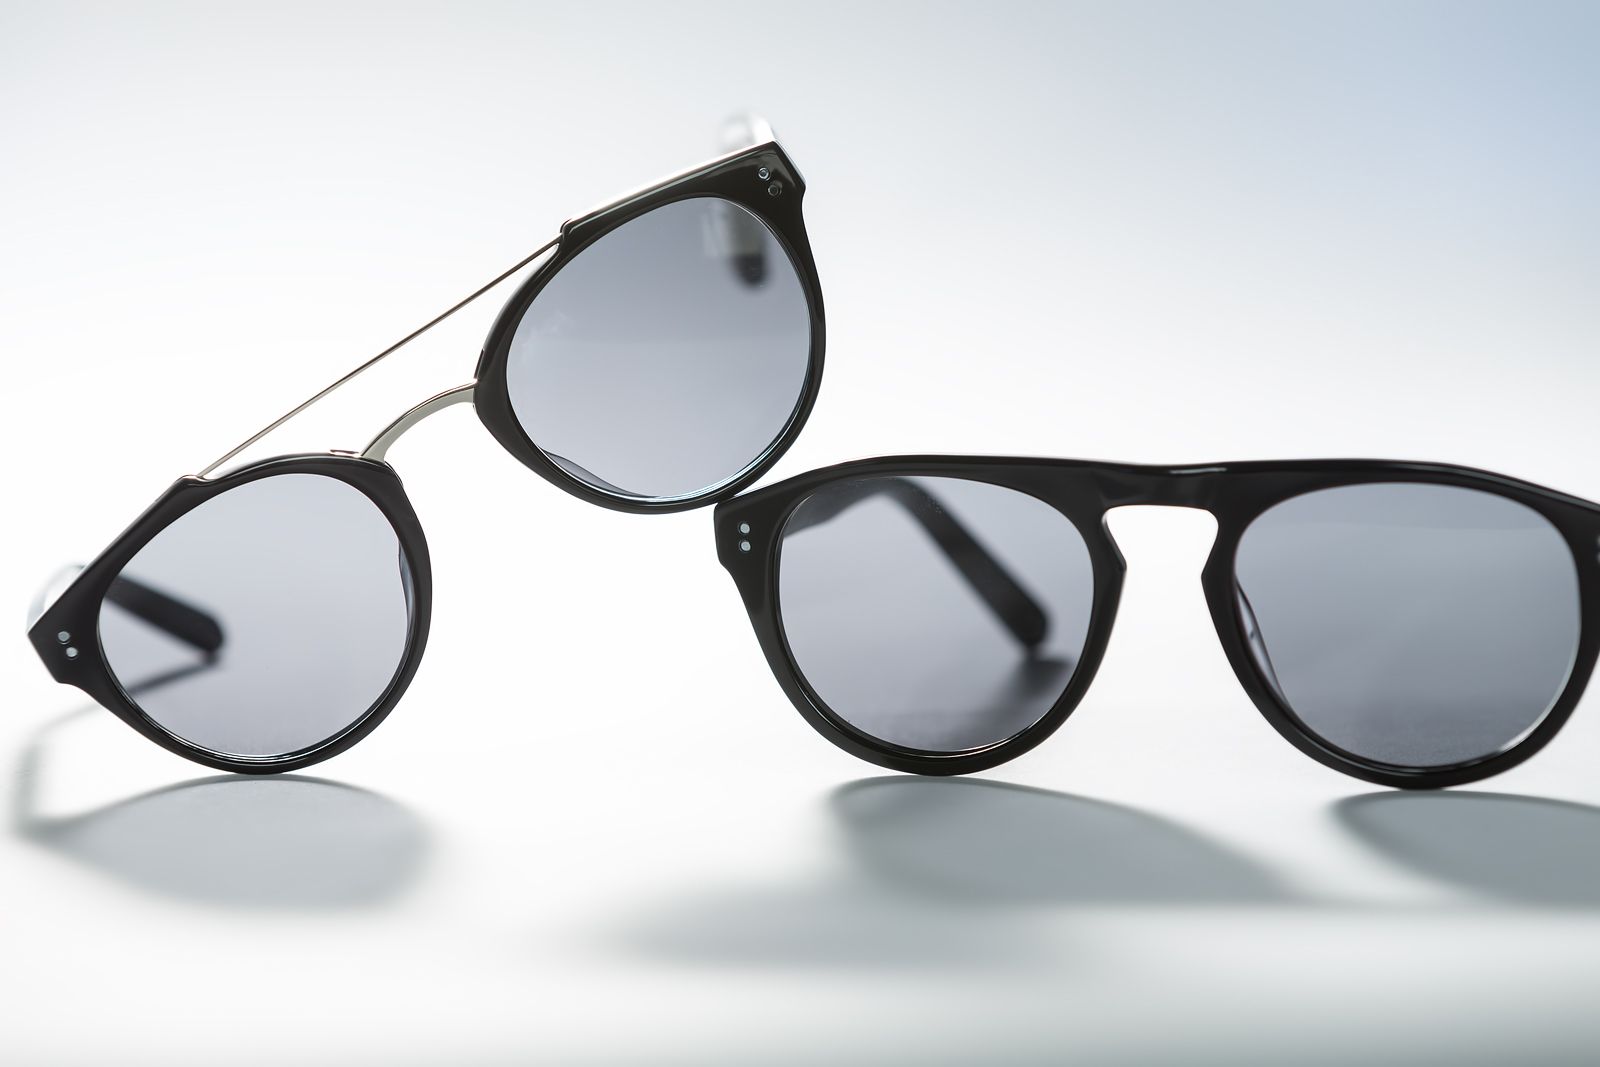 Tzukuri smart sunglasses will alert your iPhone when they go missing